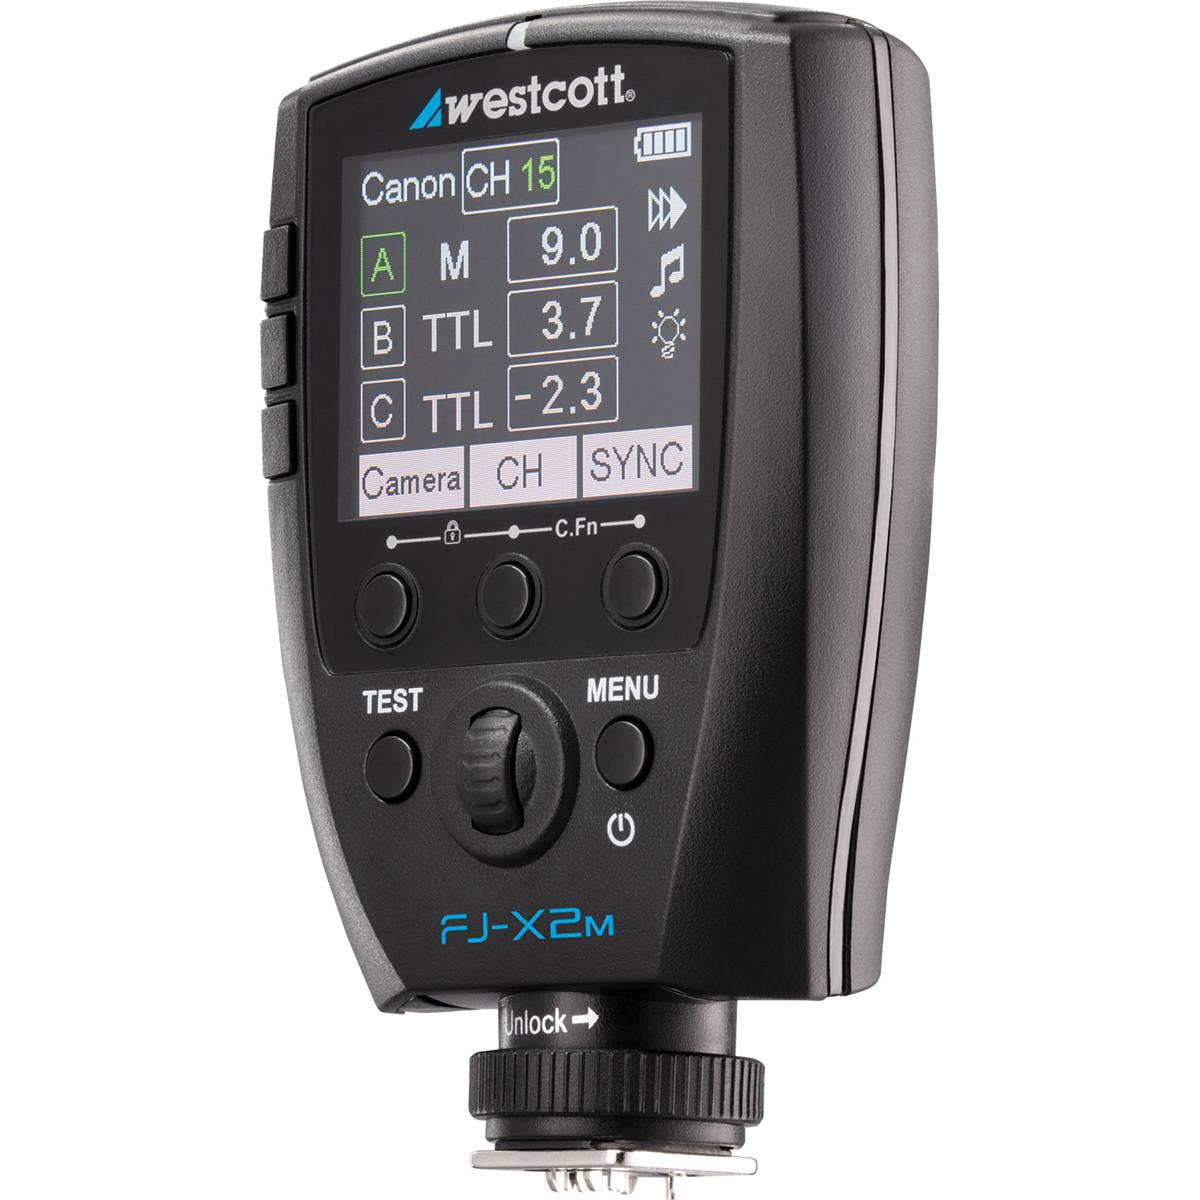 Image of Westcott FJ-X2m Universal Wireless Flash Trigger